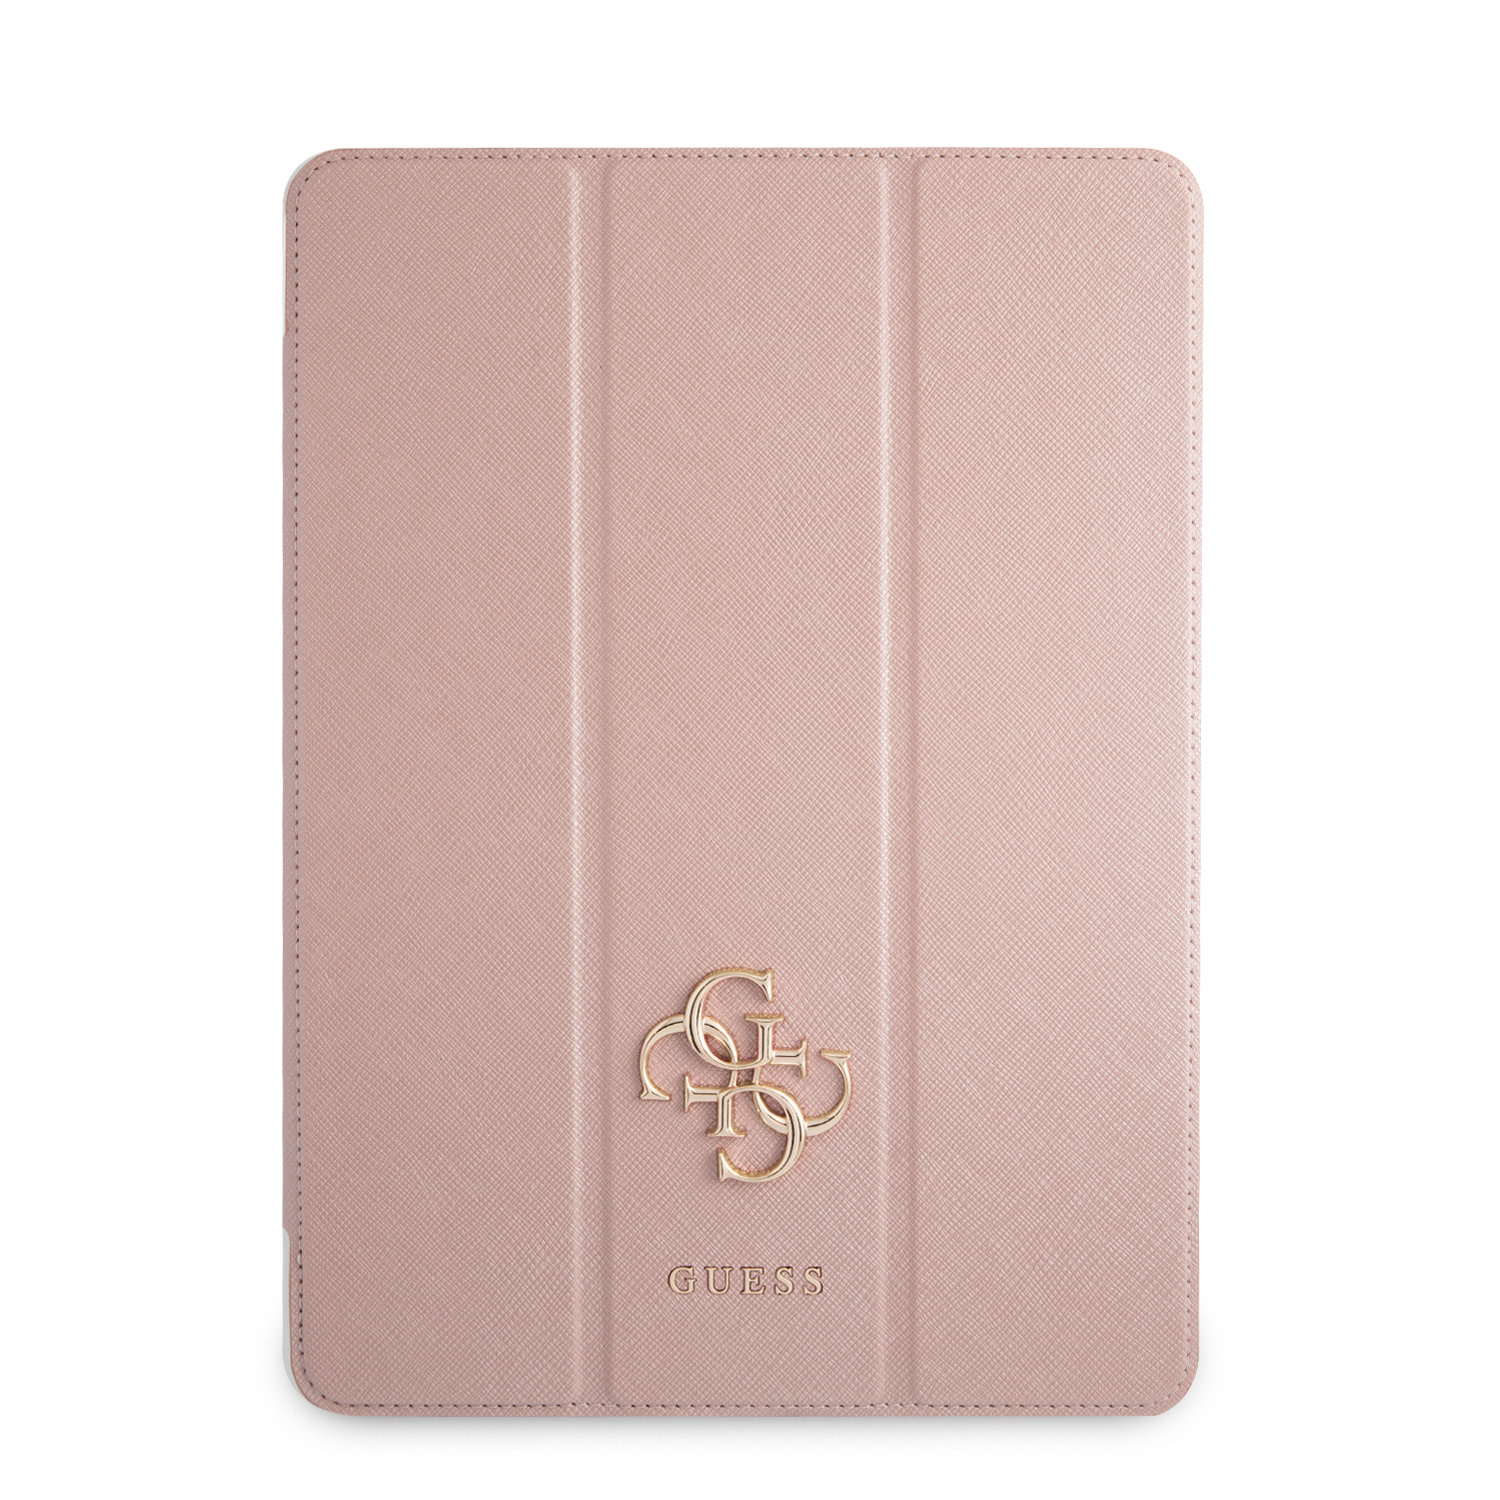 Guess Folio iPad Pro 12.9 colos (2021) könyvtok - 